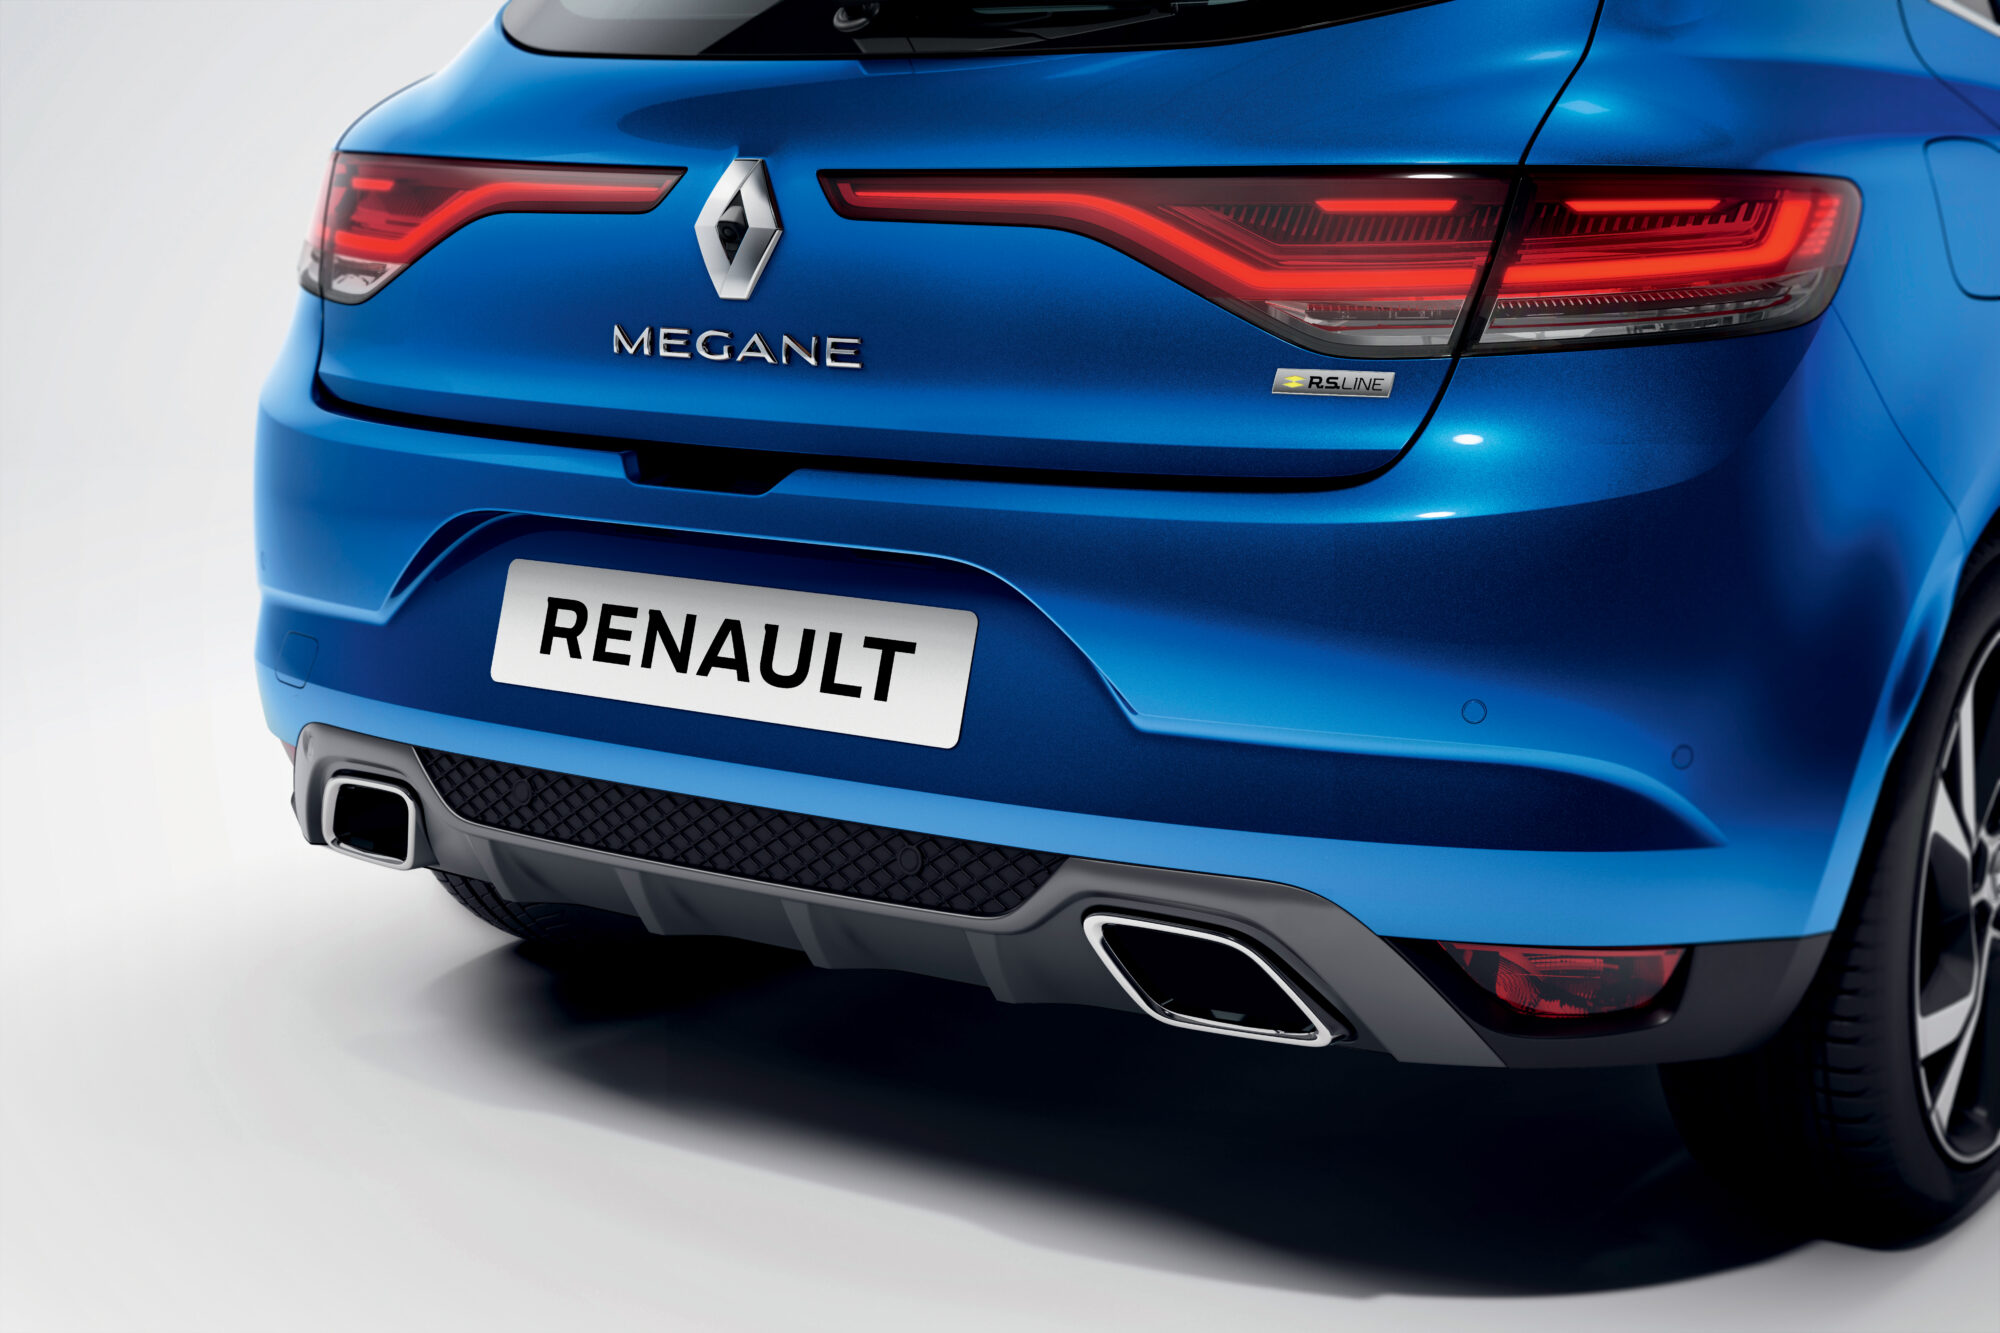 2020 - Nouvelle Renault MEGANE R.S. Line